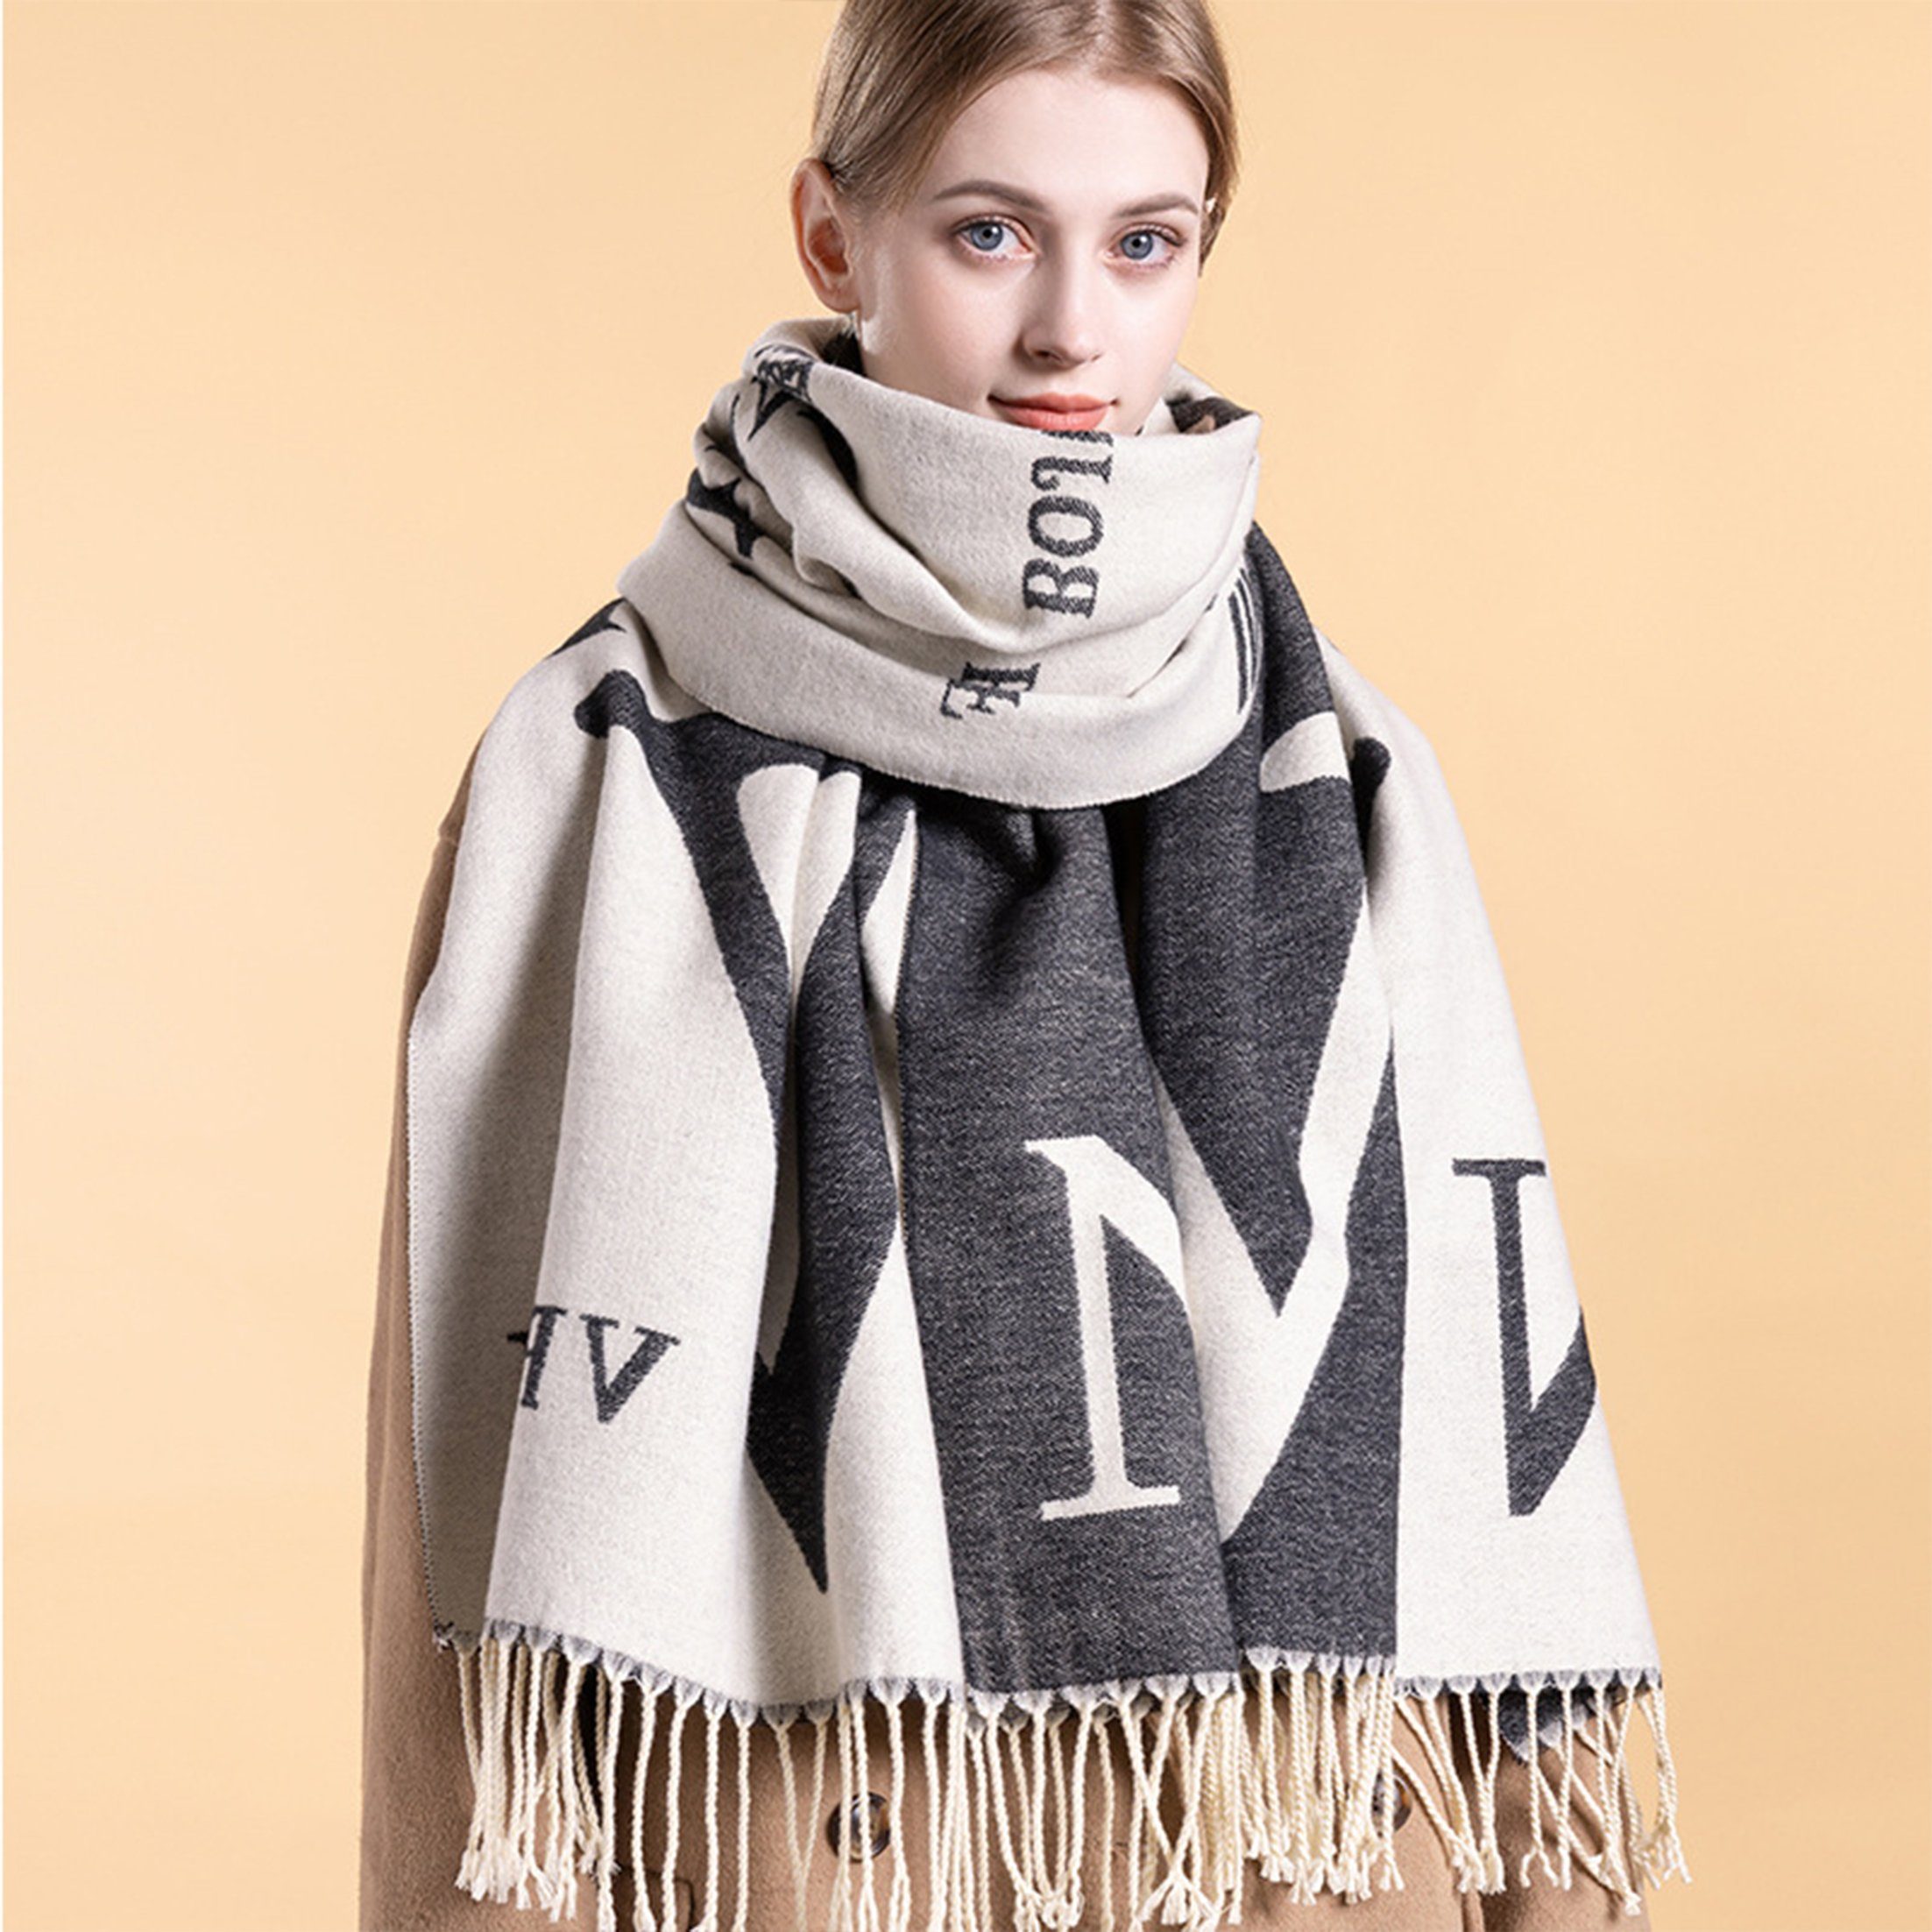 Viellan Modeschal Kaschmir-Kunstfaser-Schal,Schal verdicken für Damen,190cm